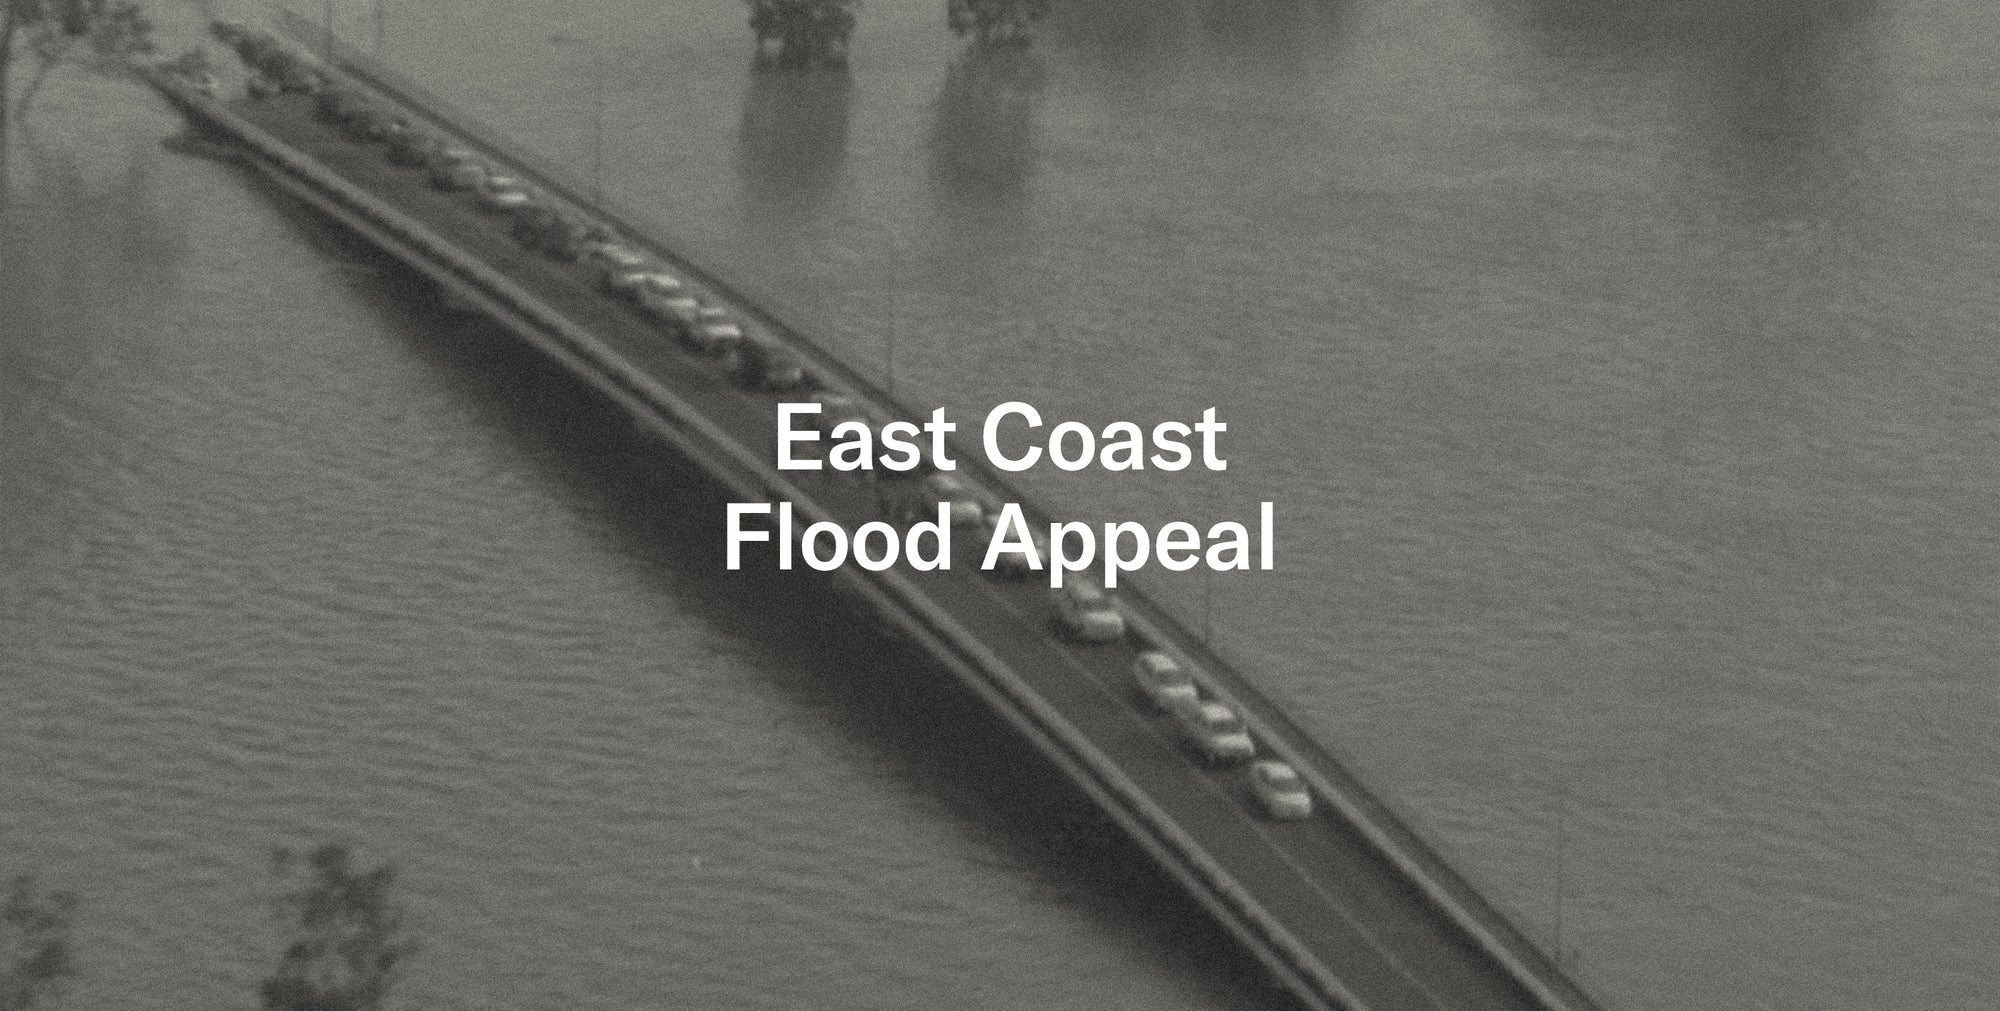 50k for East Coast Flood Appeal